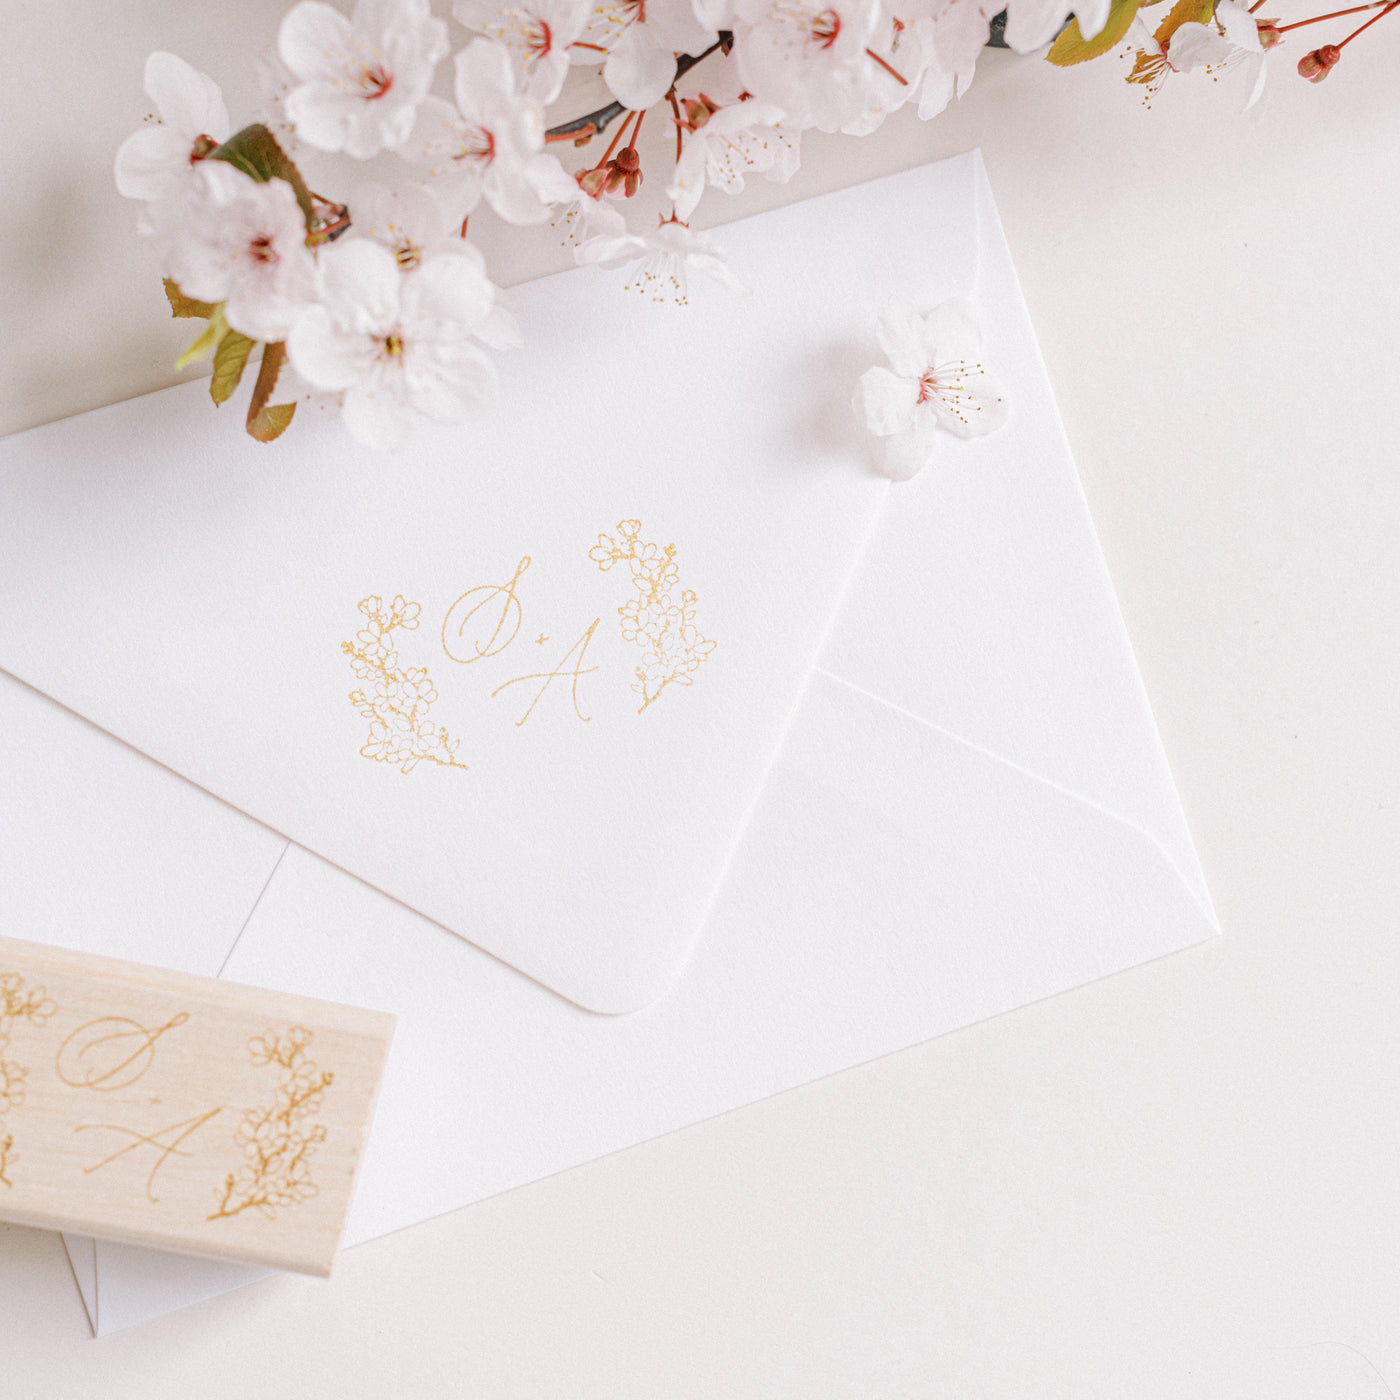 Cherish Cherry Blossom Monogram Rubber Stamp for Fine Art Wedding Invitations | 'Sakura' Cherry Blossom Embellishments for Blush Pink Spring Wedding | Heirloom Seals